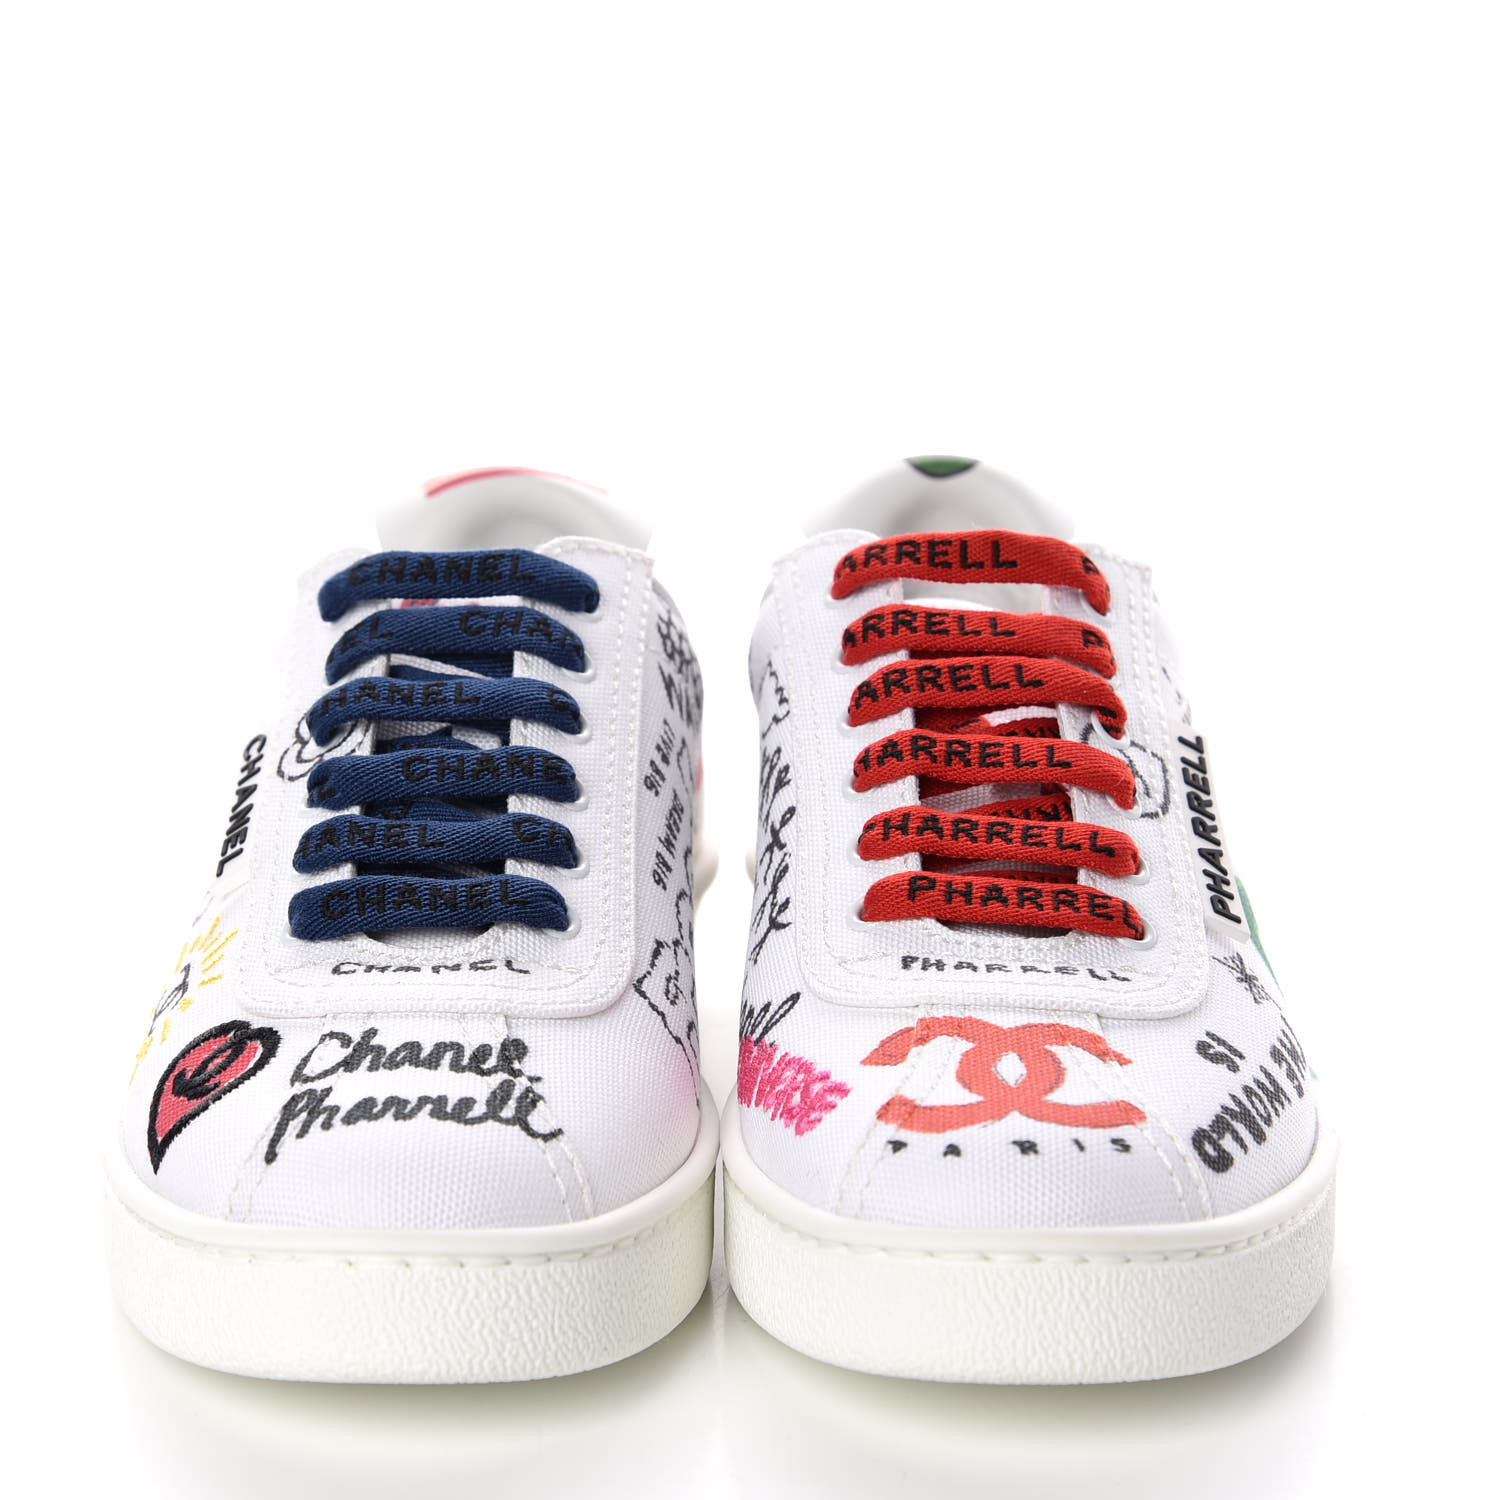 pharrell x chanel sneakers